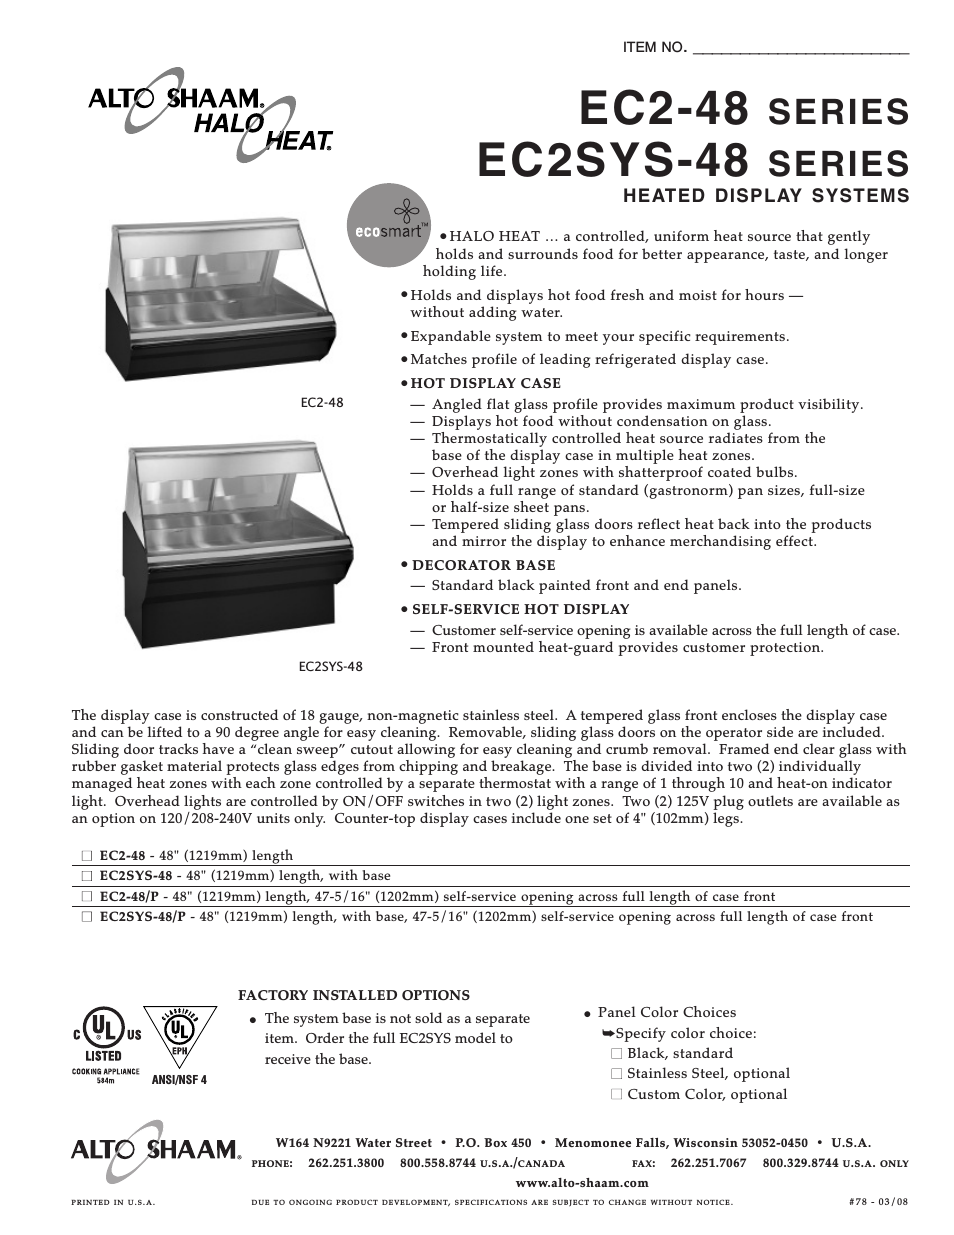 EC2-48 Series